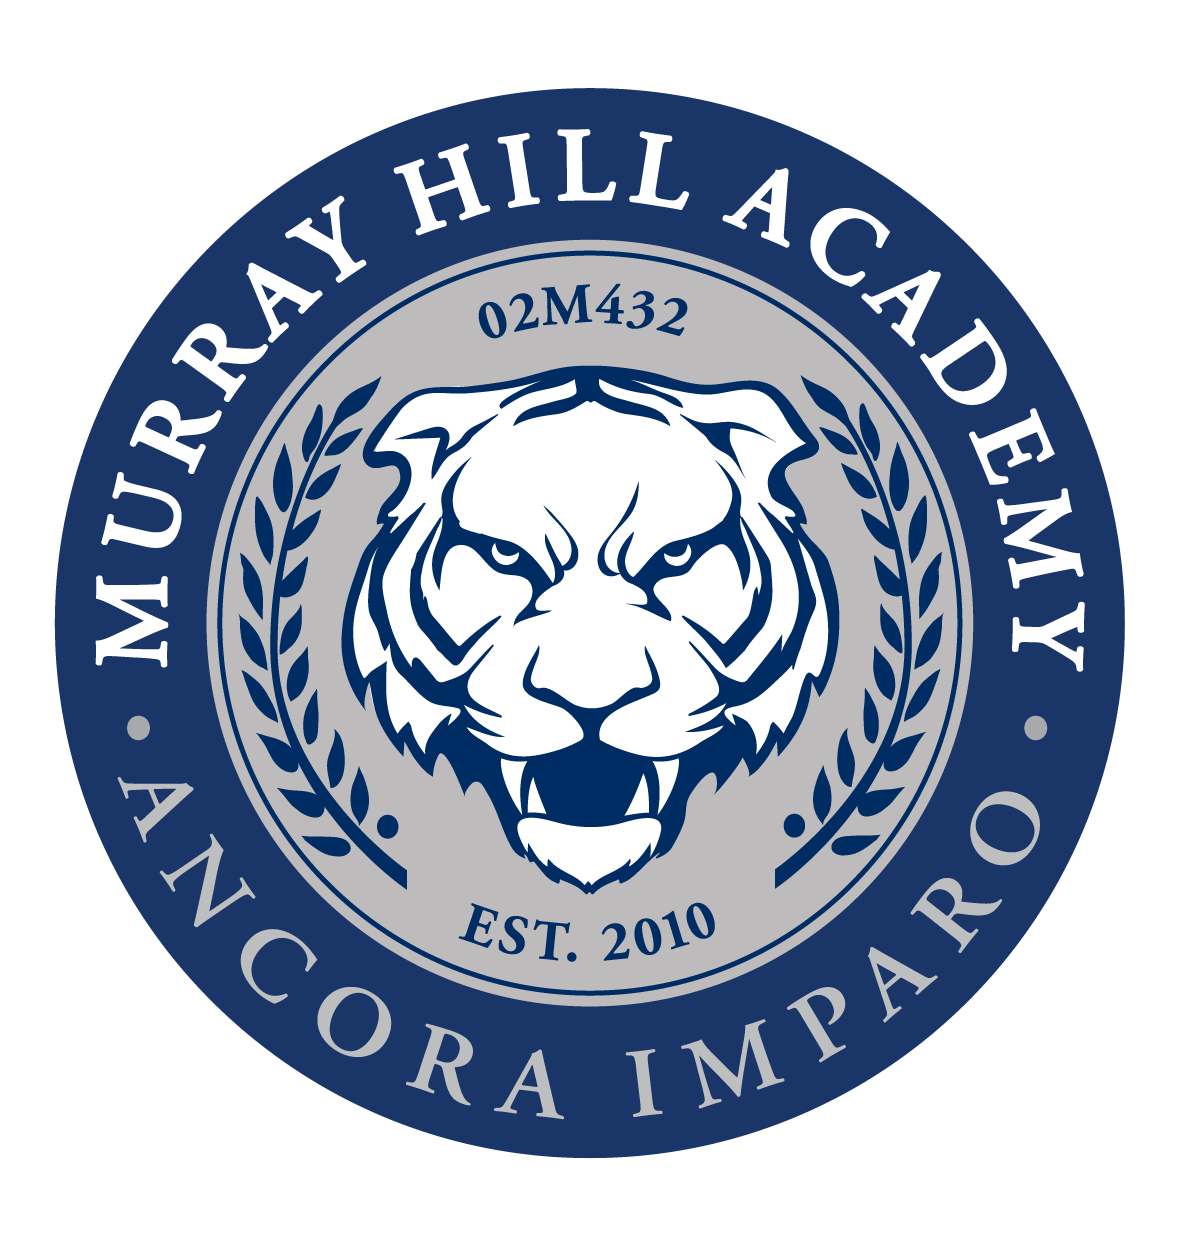 Murray Hill Academy